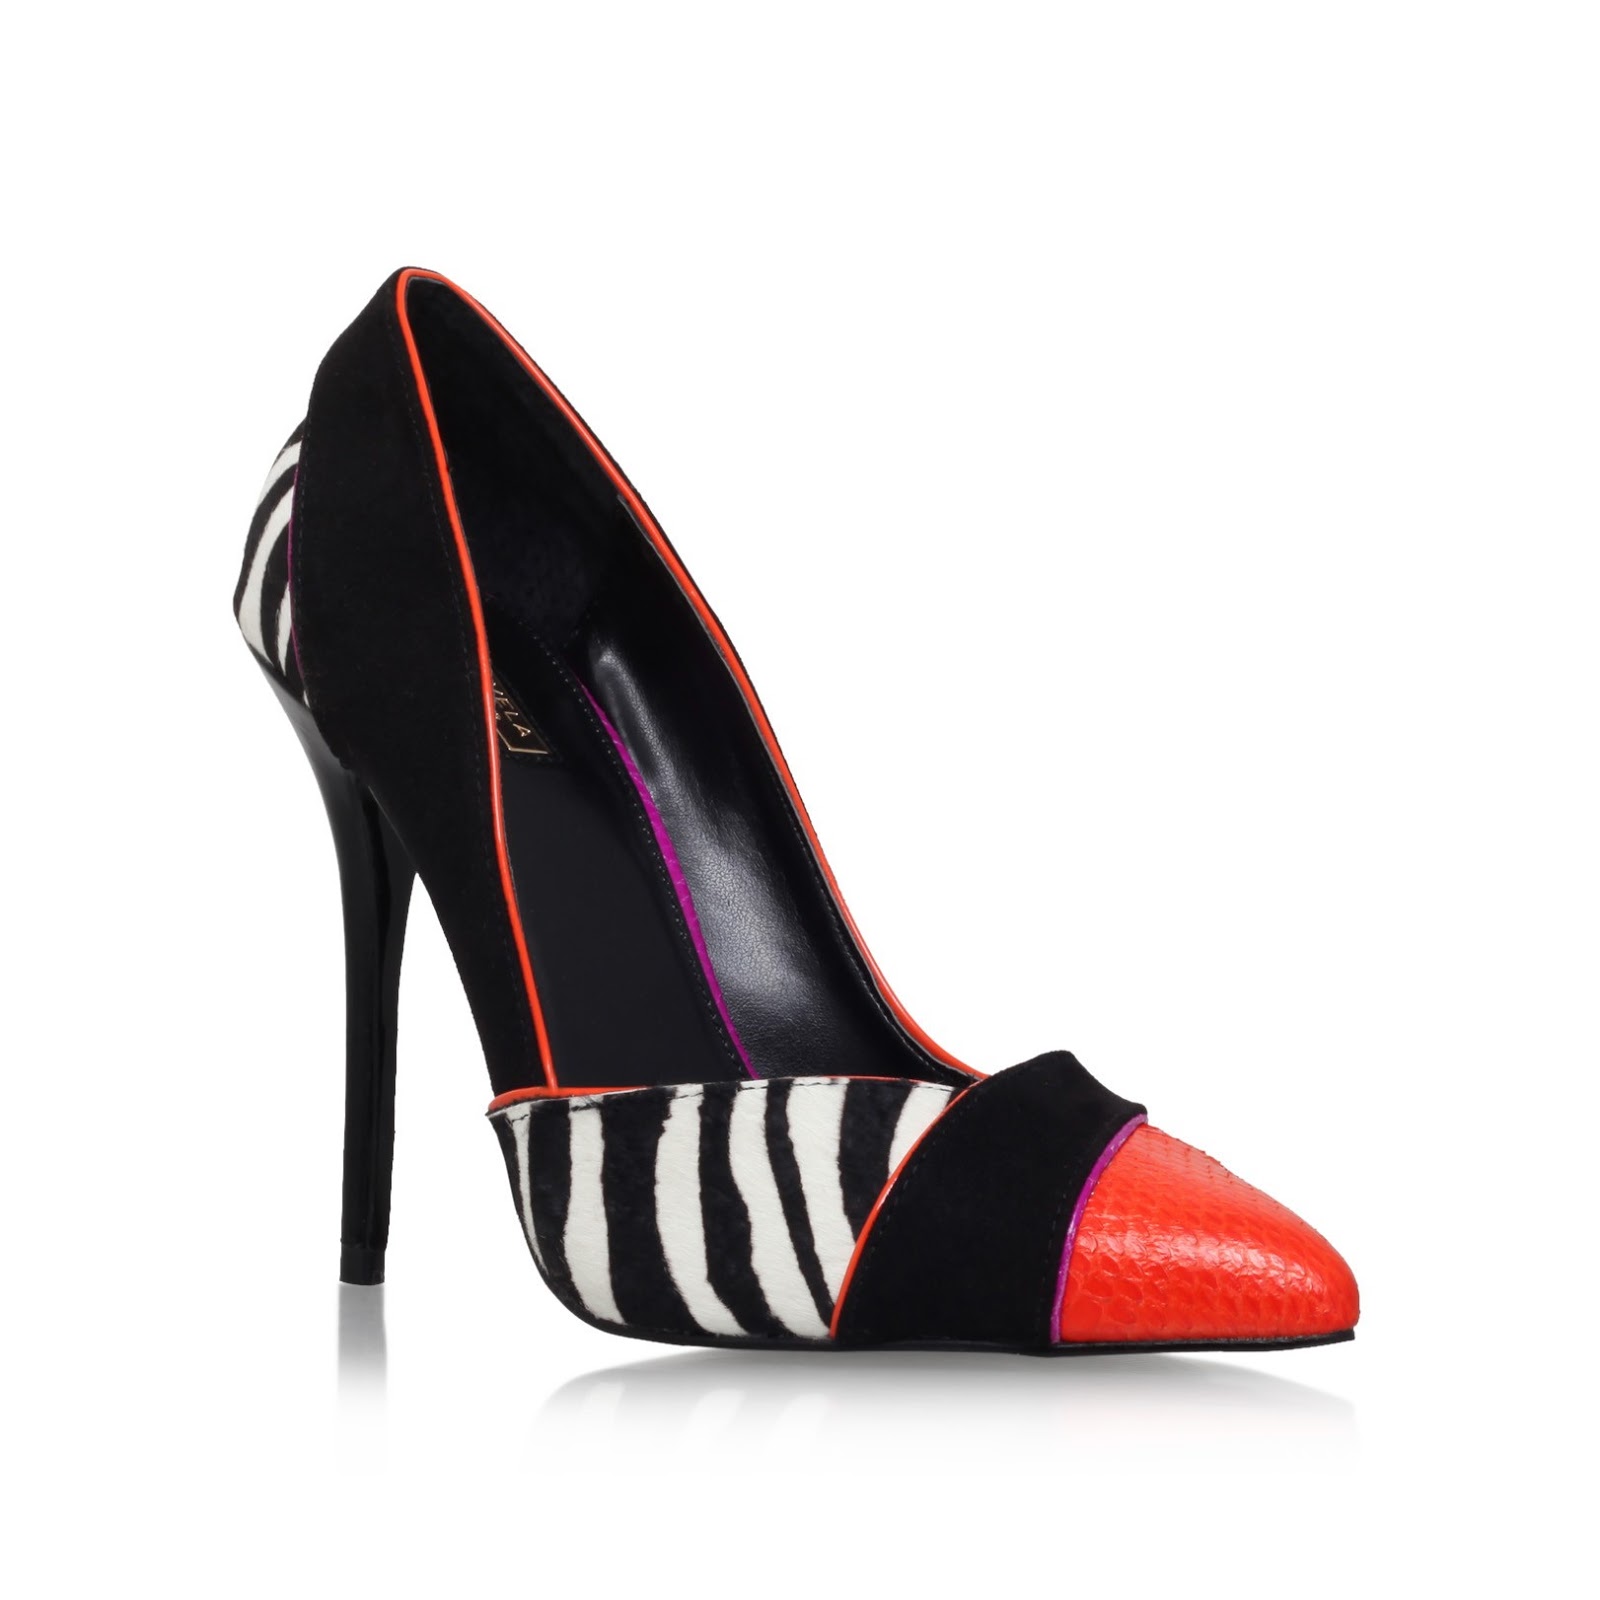 LFashionC - London Fashion Cat: Shoes - Hot Buy - AZTEC Carvela Kurt Geiger